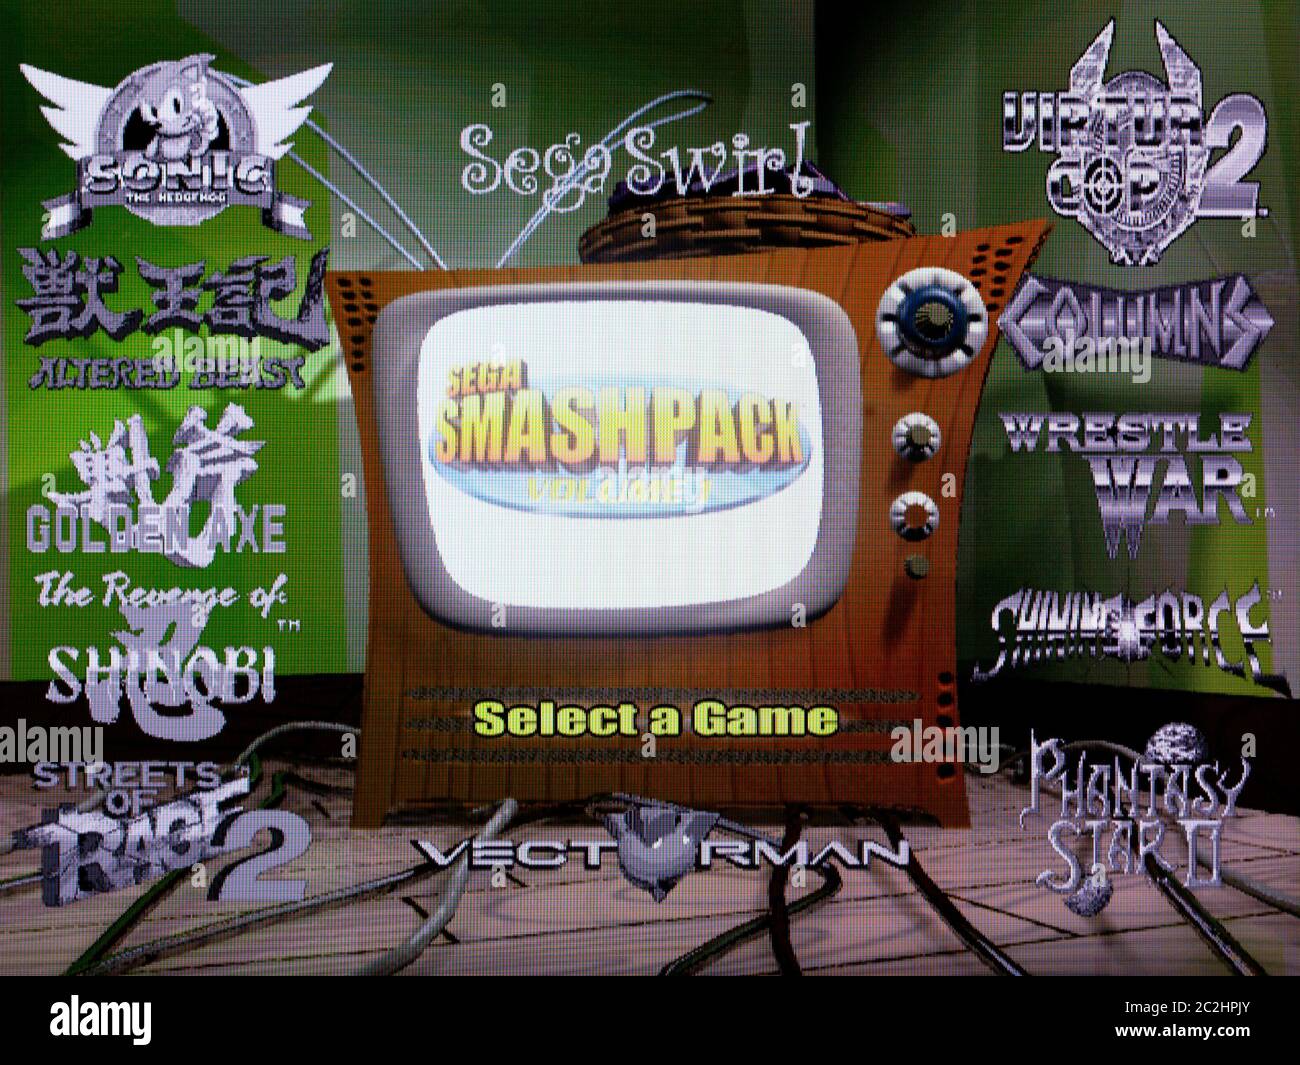 Sega Smash Pack Volume 1 - Sega Dreamcast Videogame - Editorial use only Stock Photo